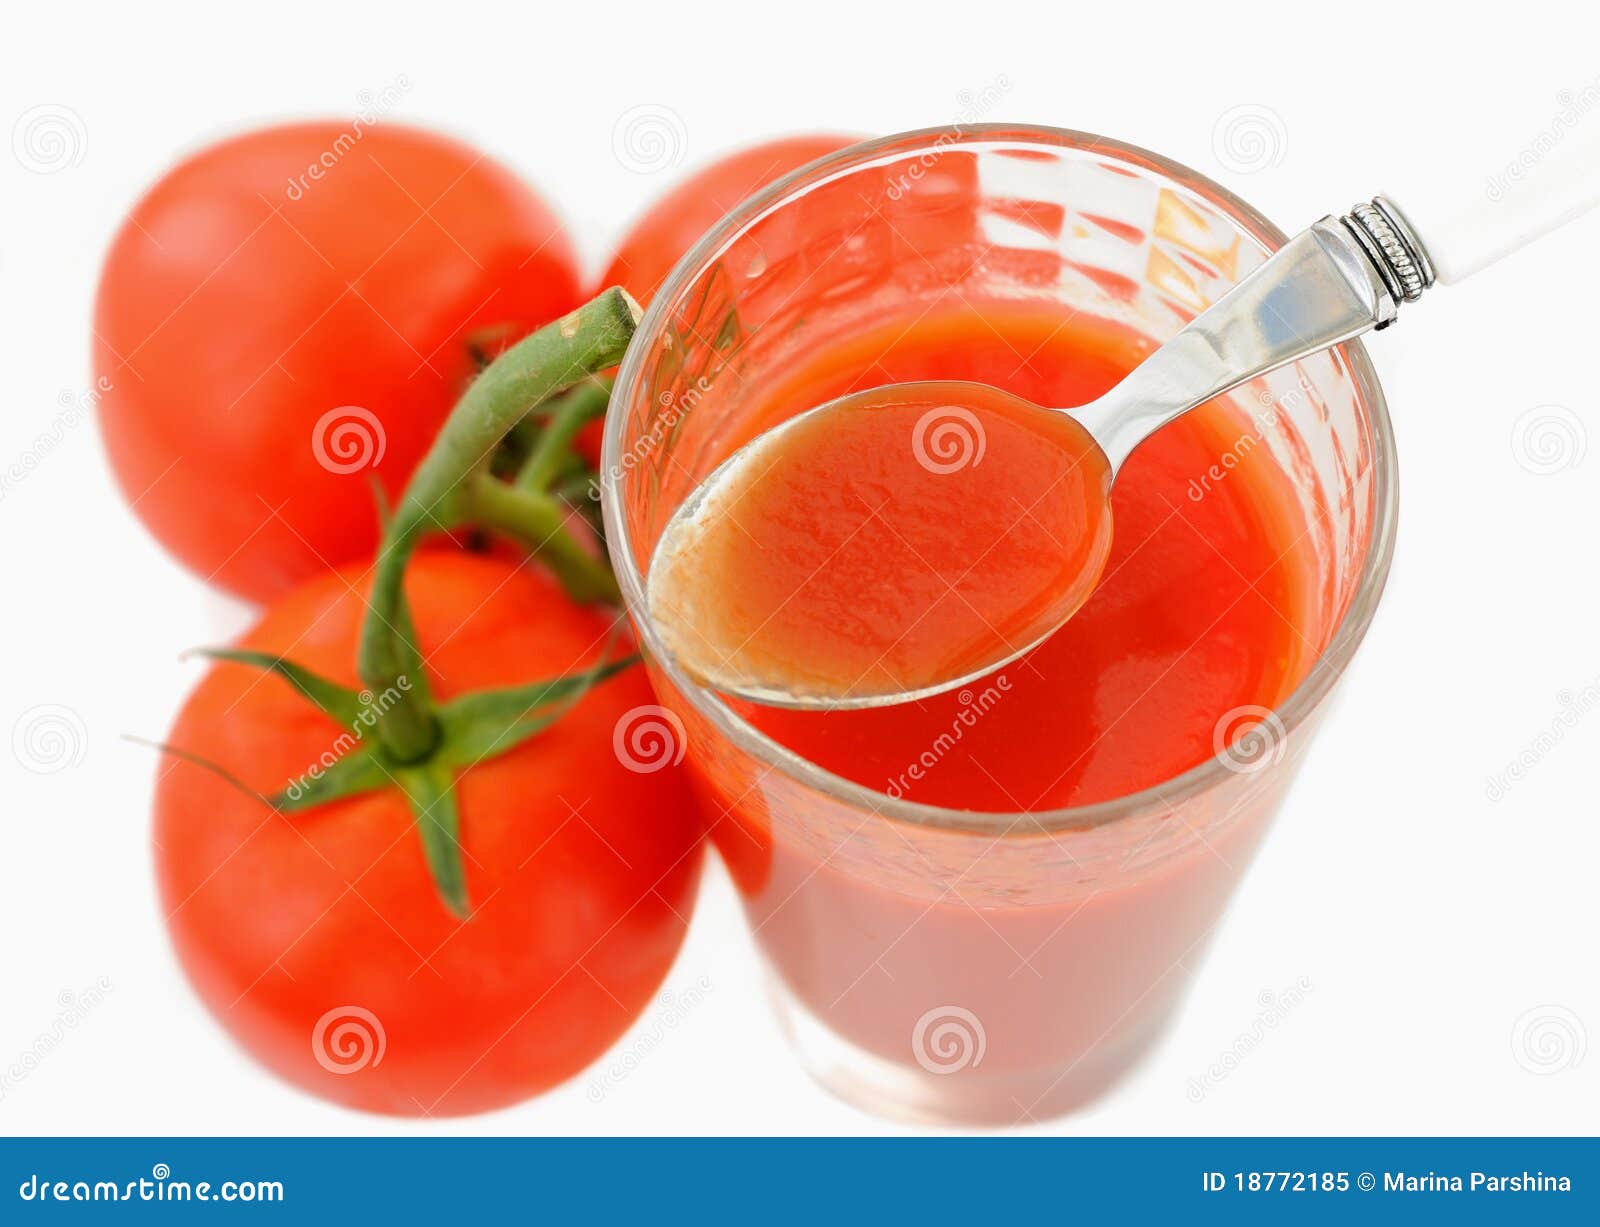 tomato juice clipart - photo #25